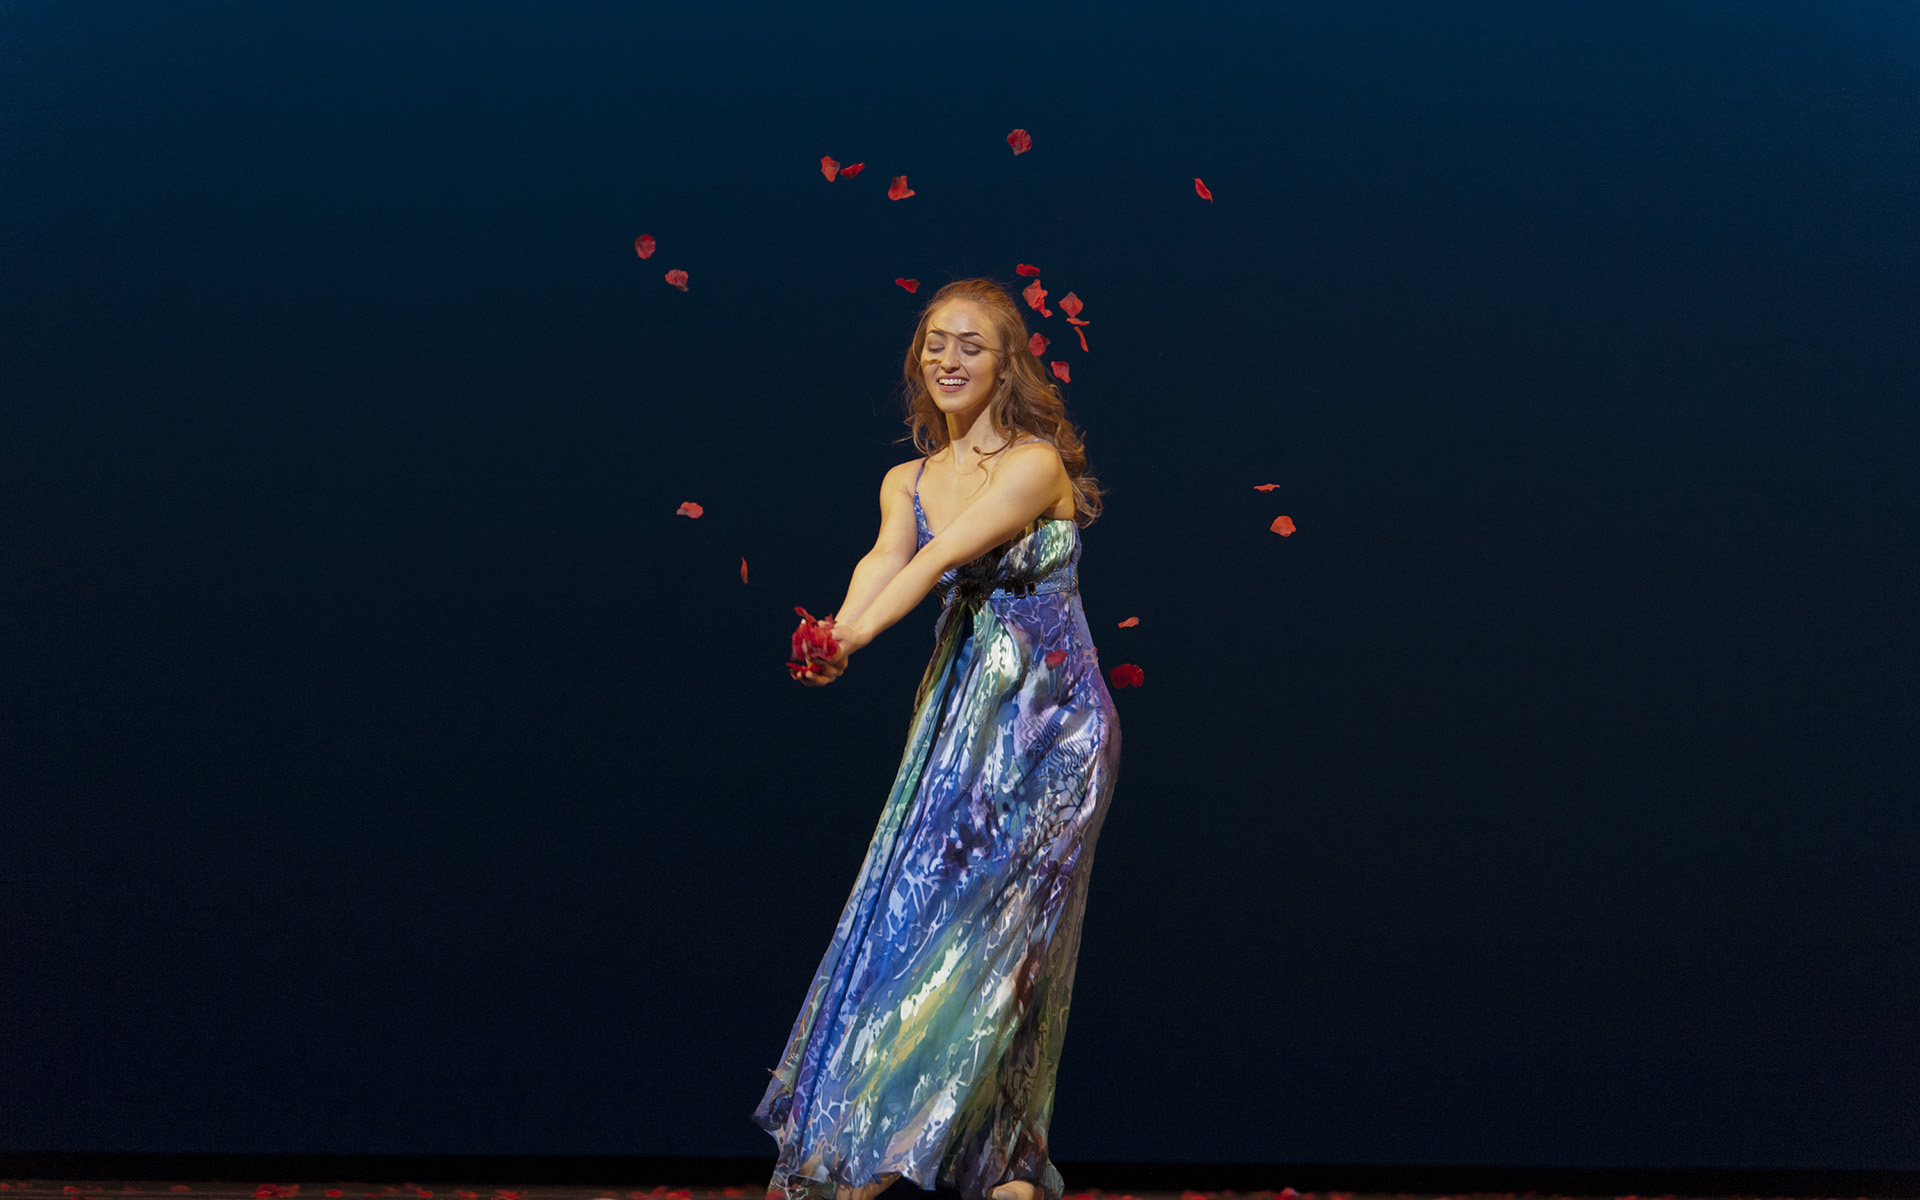 Dance Gala 2017 photo. Female dancer in blue dress throwing rose petals.